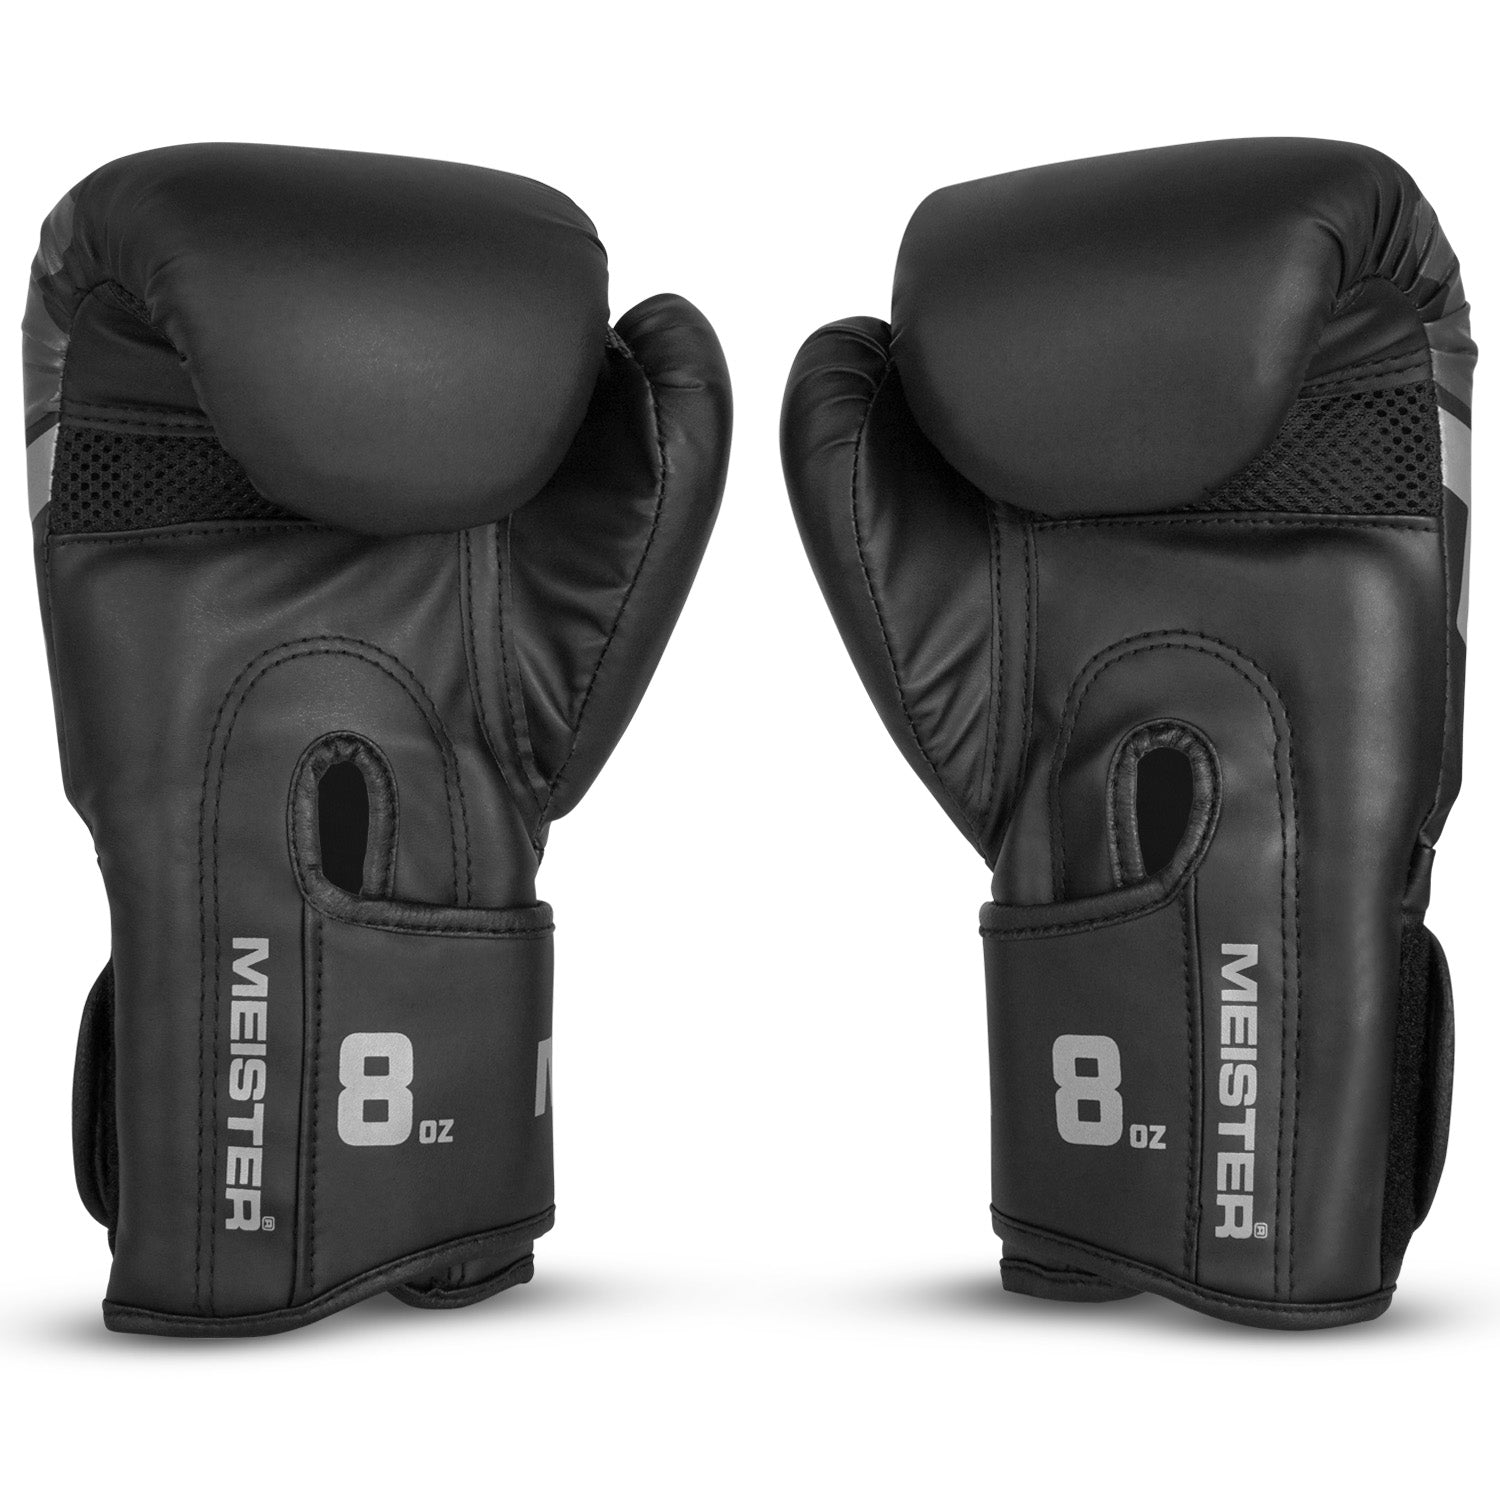 Meister 8oz [CRITICAL] Boxing Gloves - Matte Black